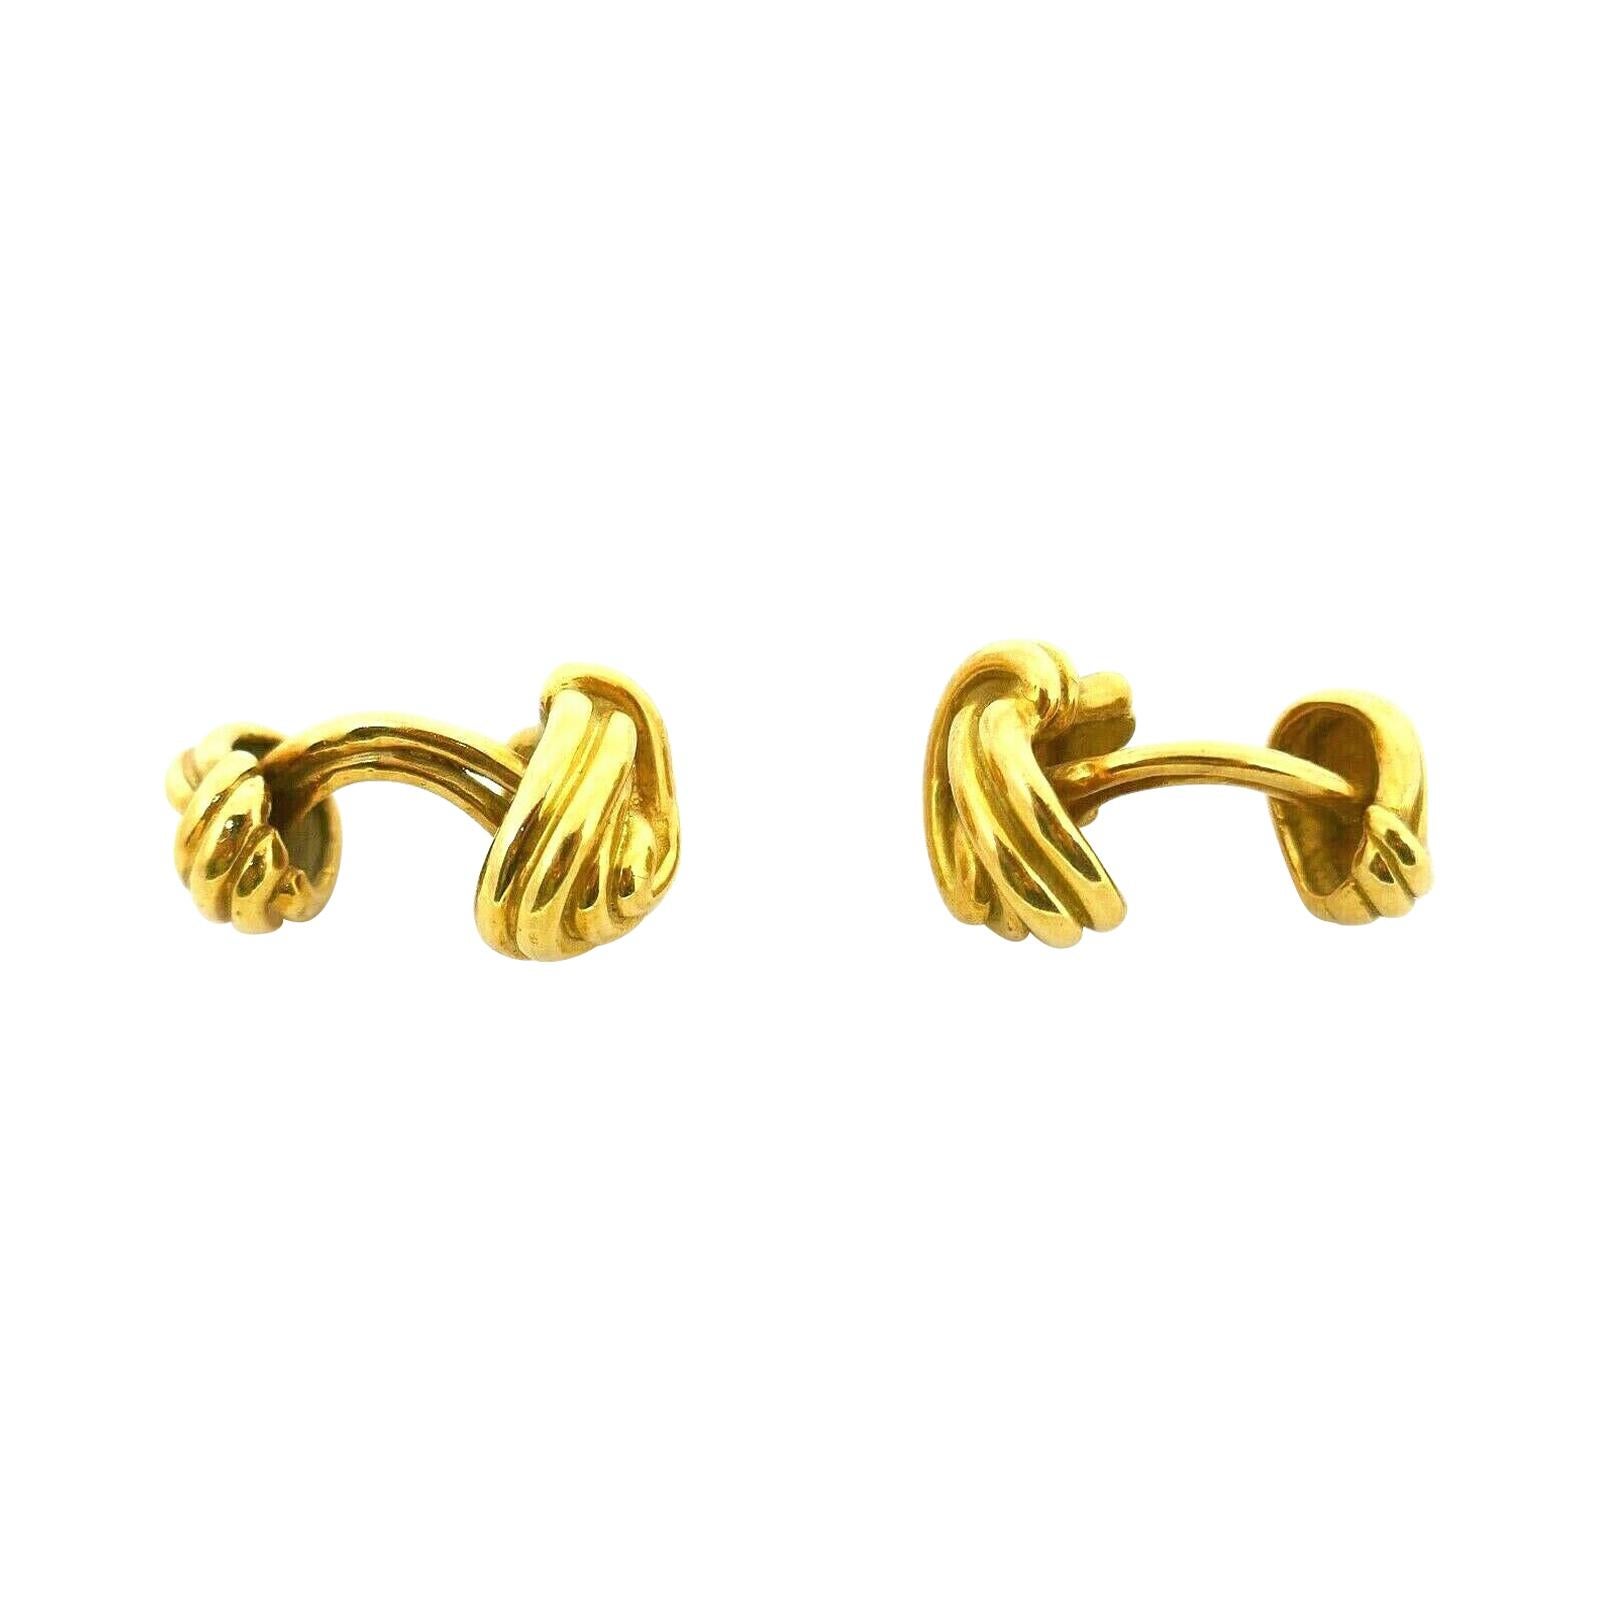 Tiffany & Co. Vintage Yellow Gold Swirled Knot Cufflinks